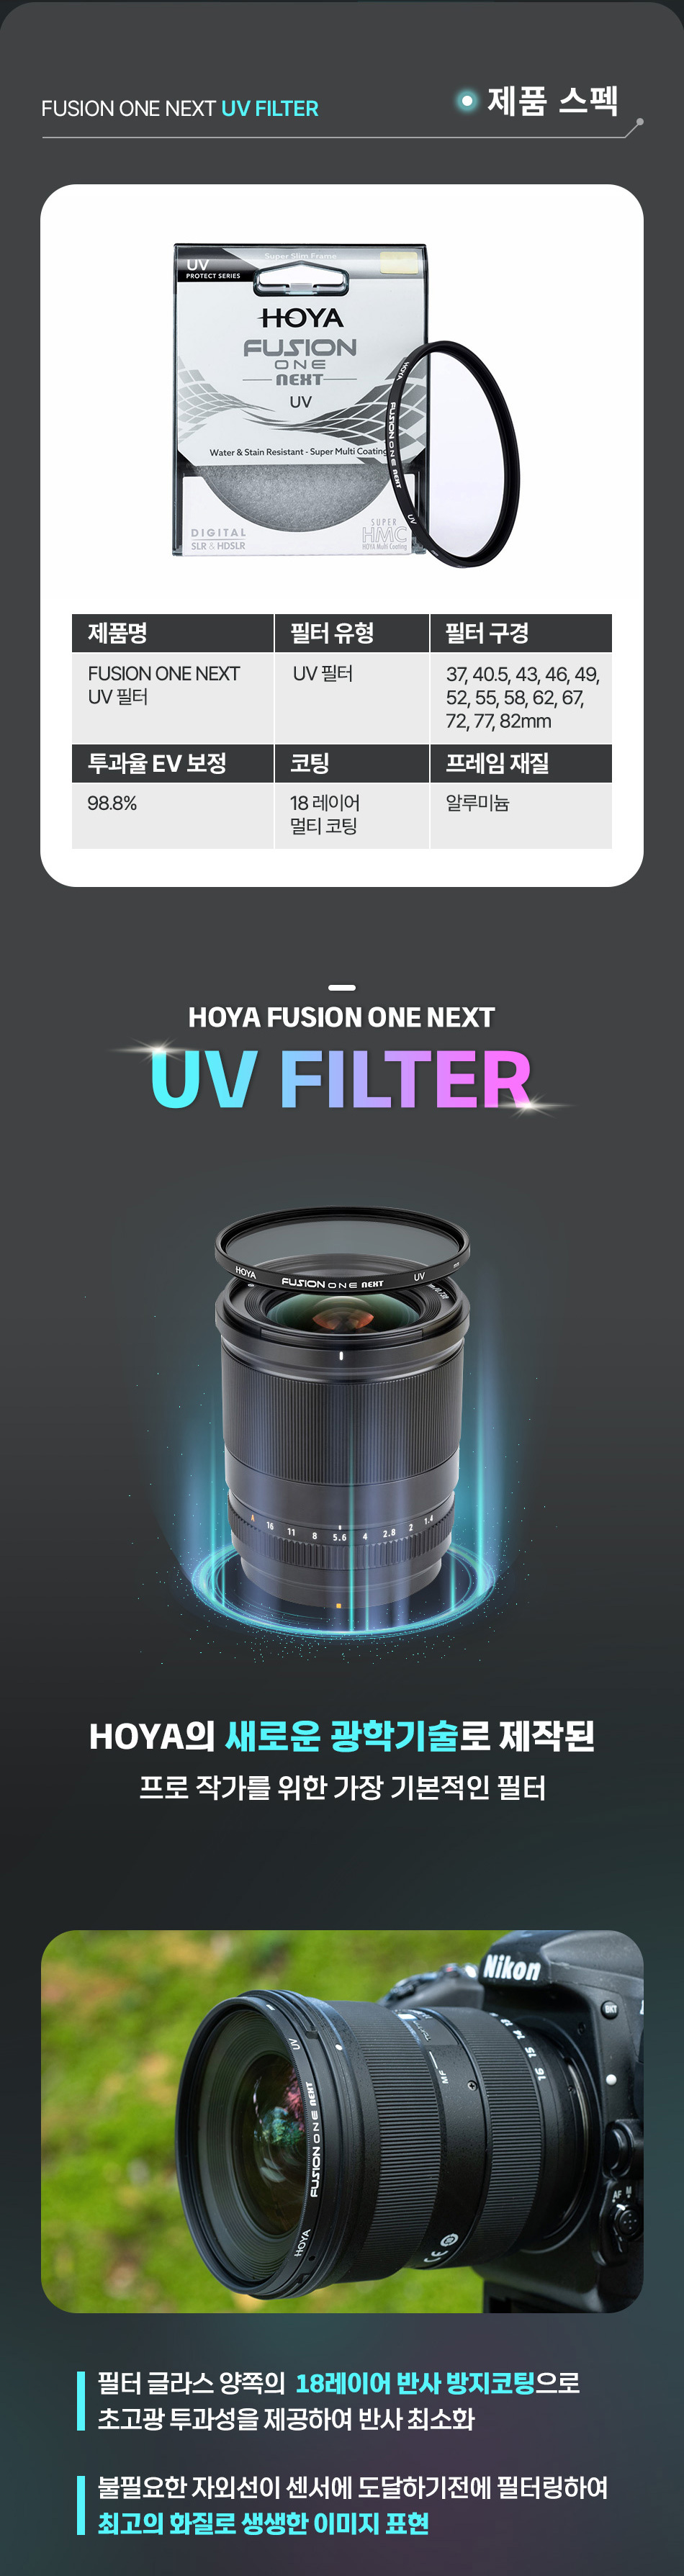 Fusion_One_next_UV_02.jpg